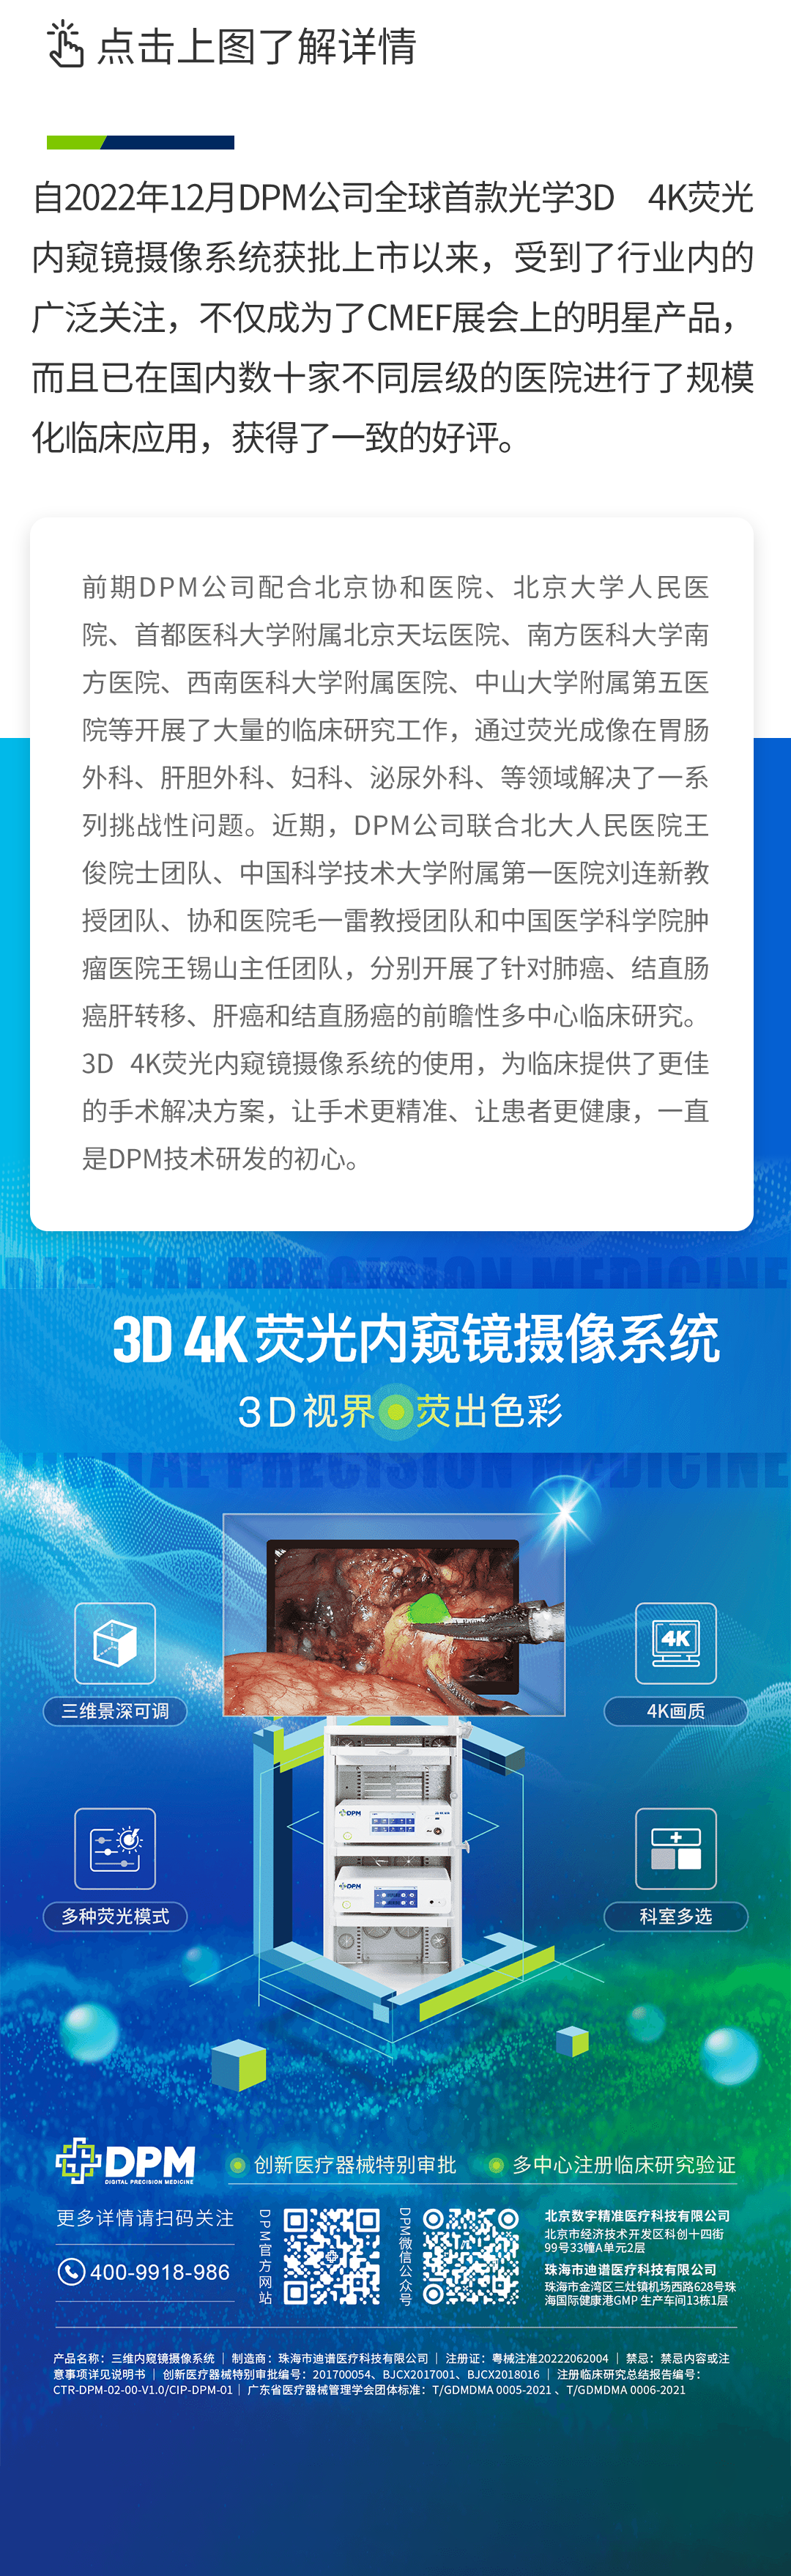 3D4K-内文.png